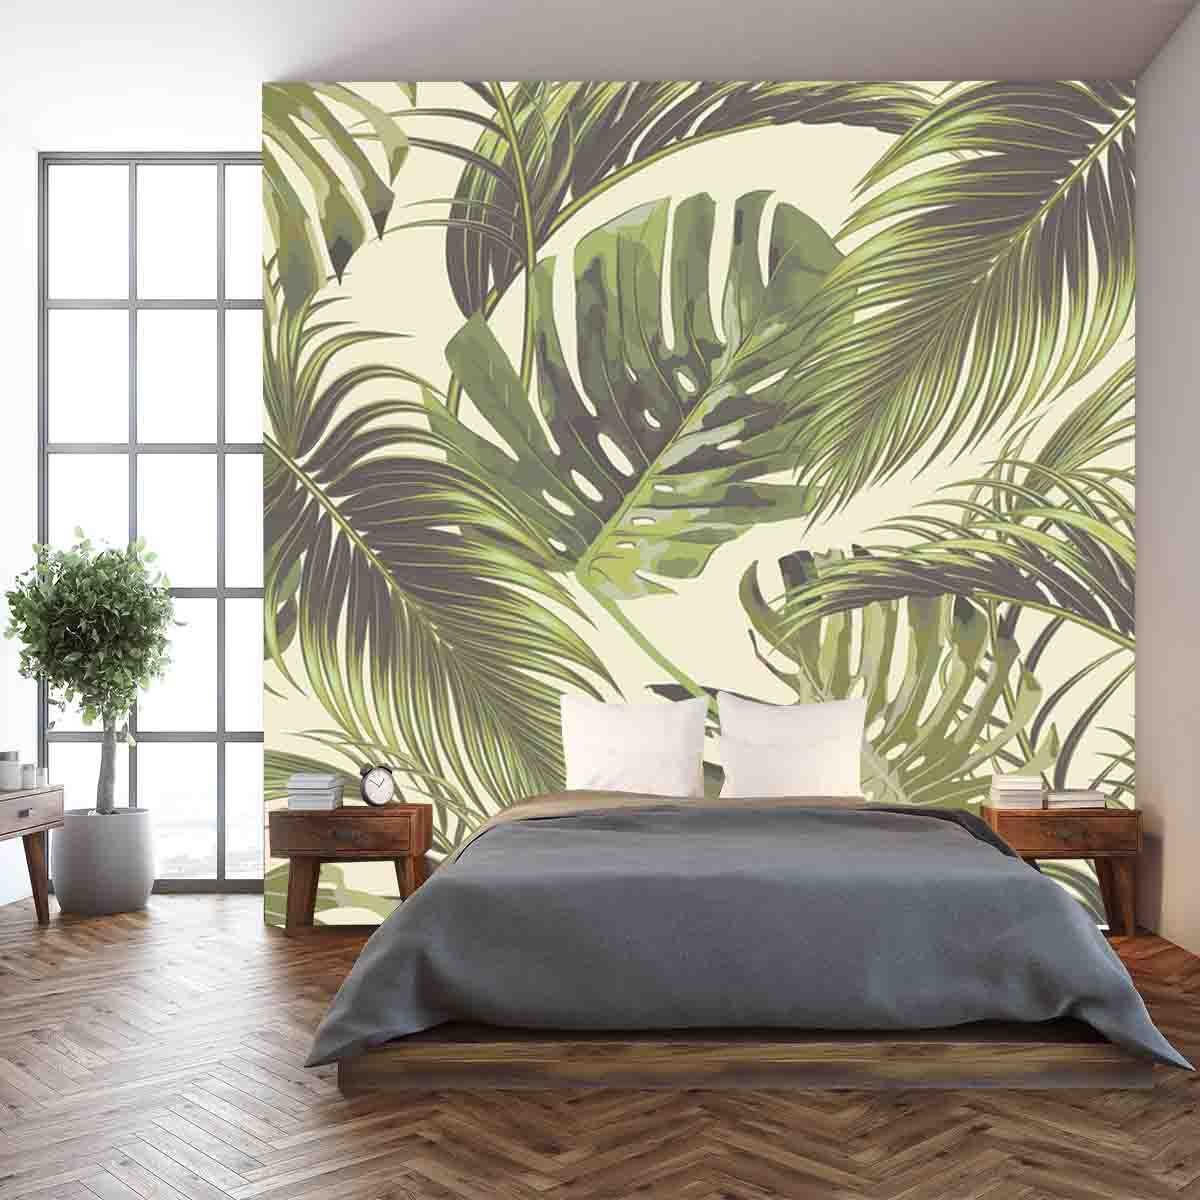 Tropical Palm Leaves, Jungle Leaf Wallpaper Bedroom Mural